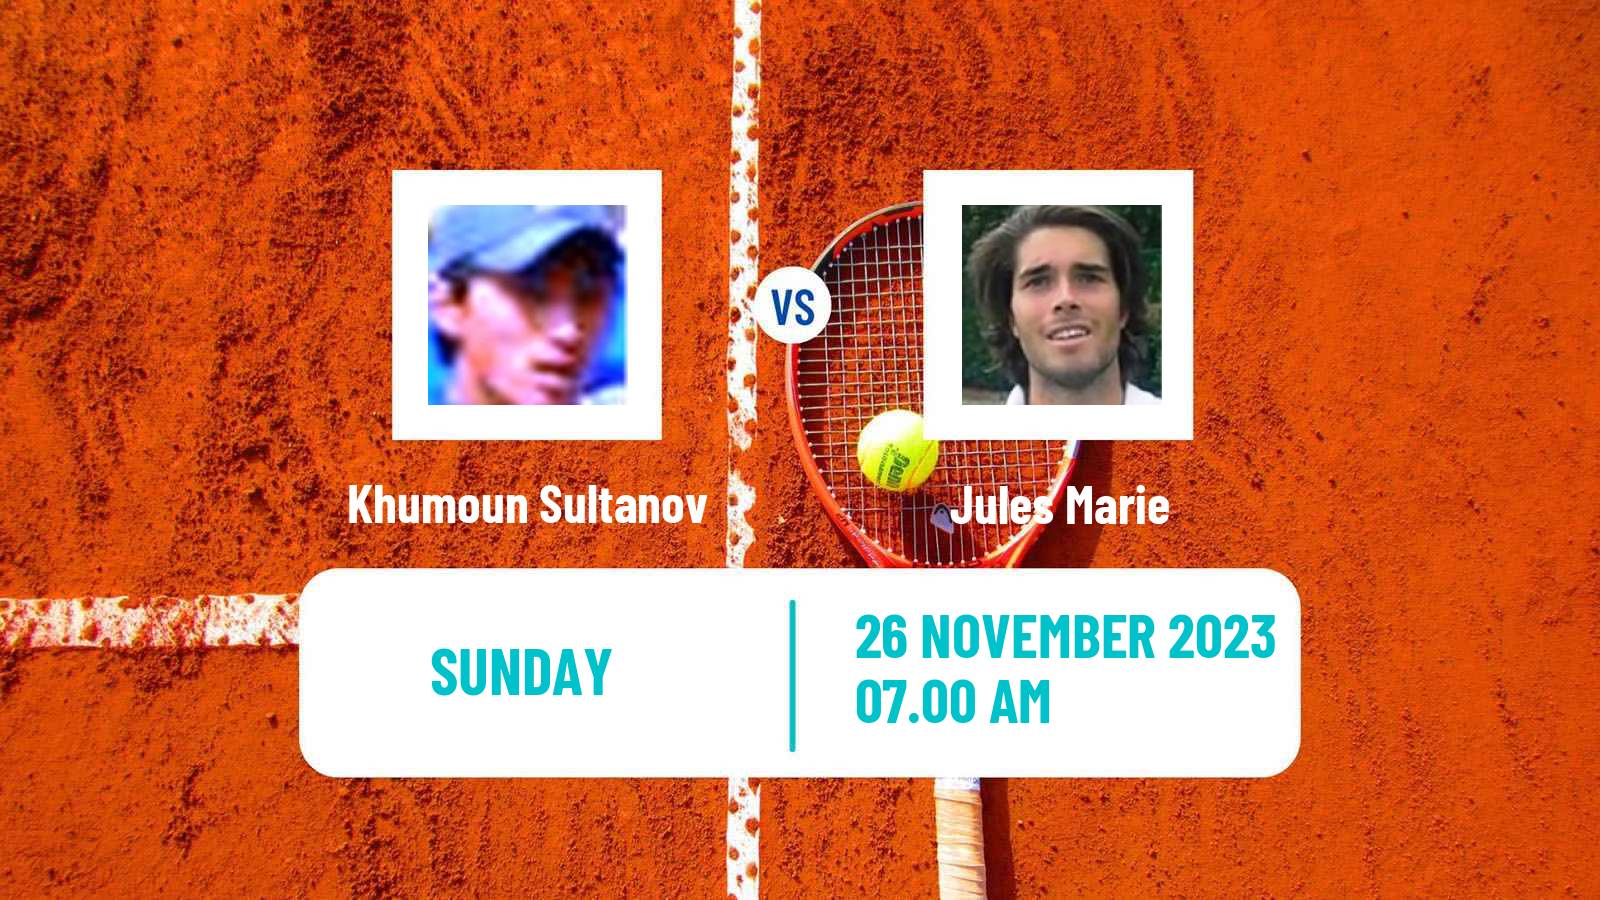 Tennis ITF M25 Vale Do Lobo 2 Men Khumoun Sultanov - Jules Marie